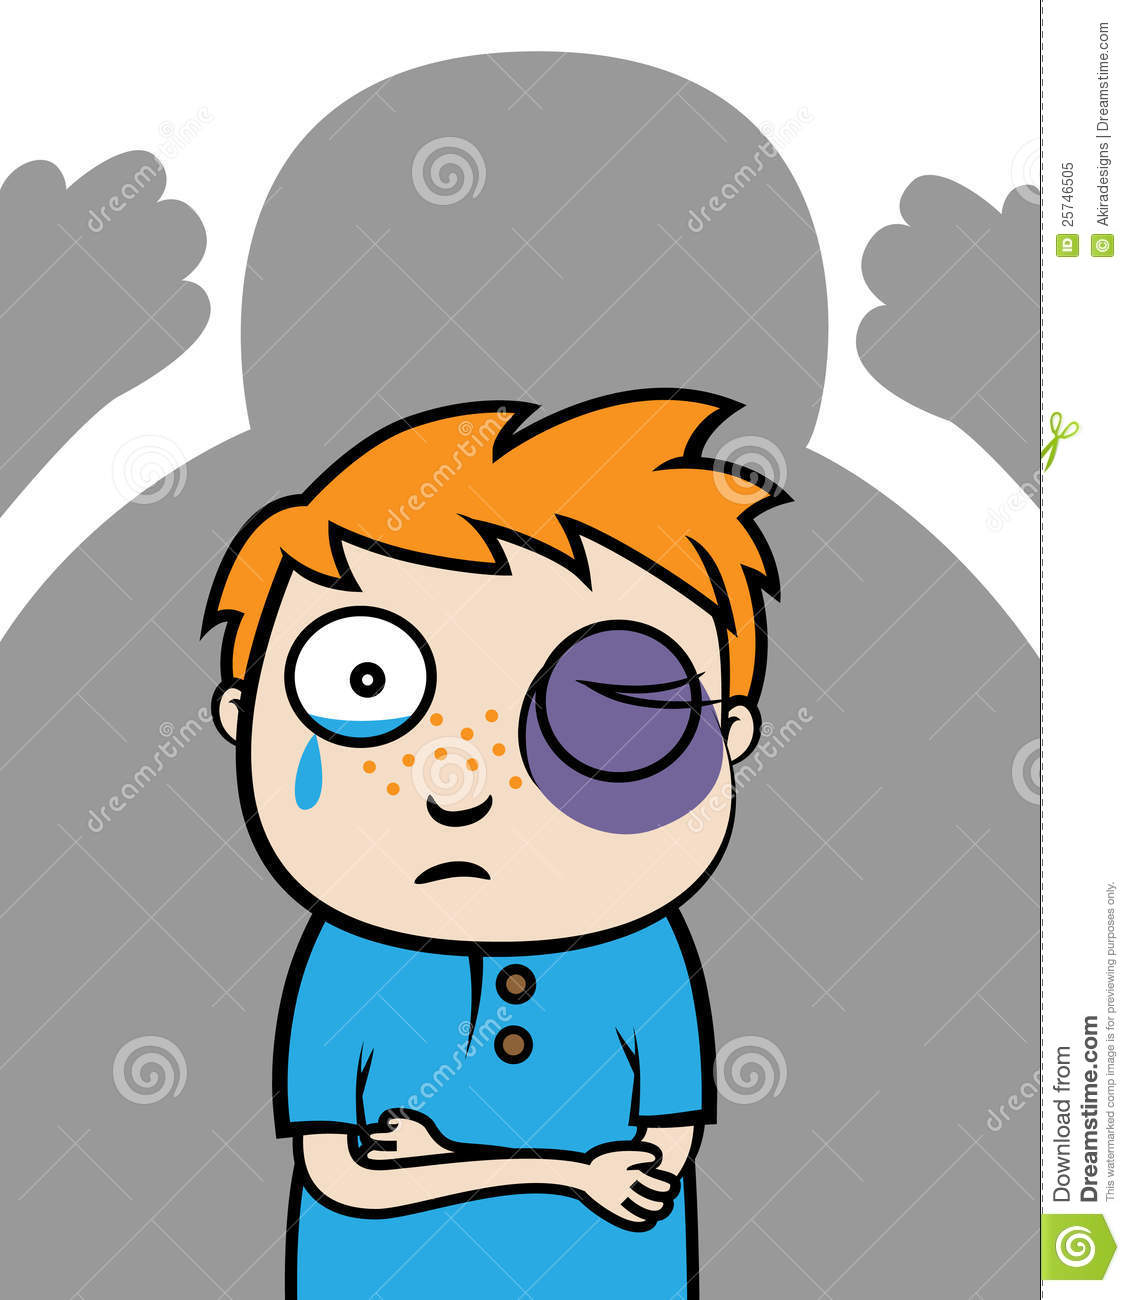 Cartoon Vector Illustration Of A Bullied Boy With Black Eye Or Victim